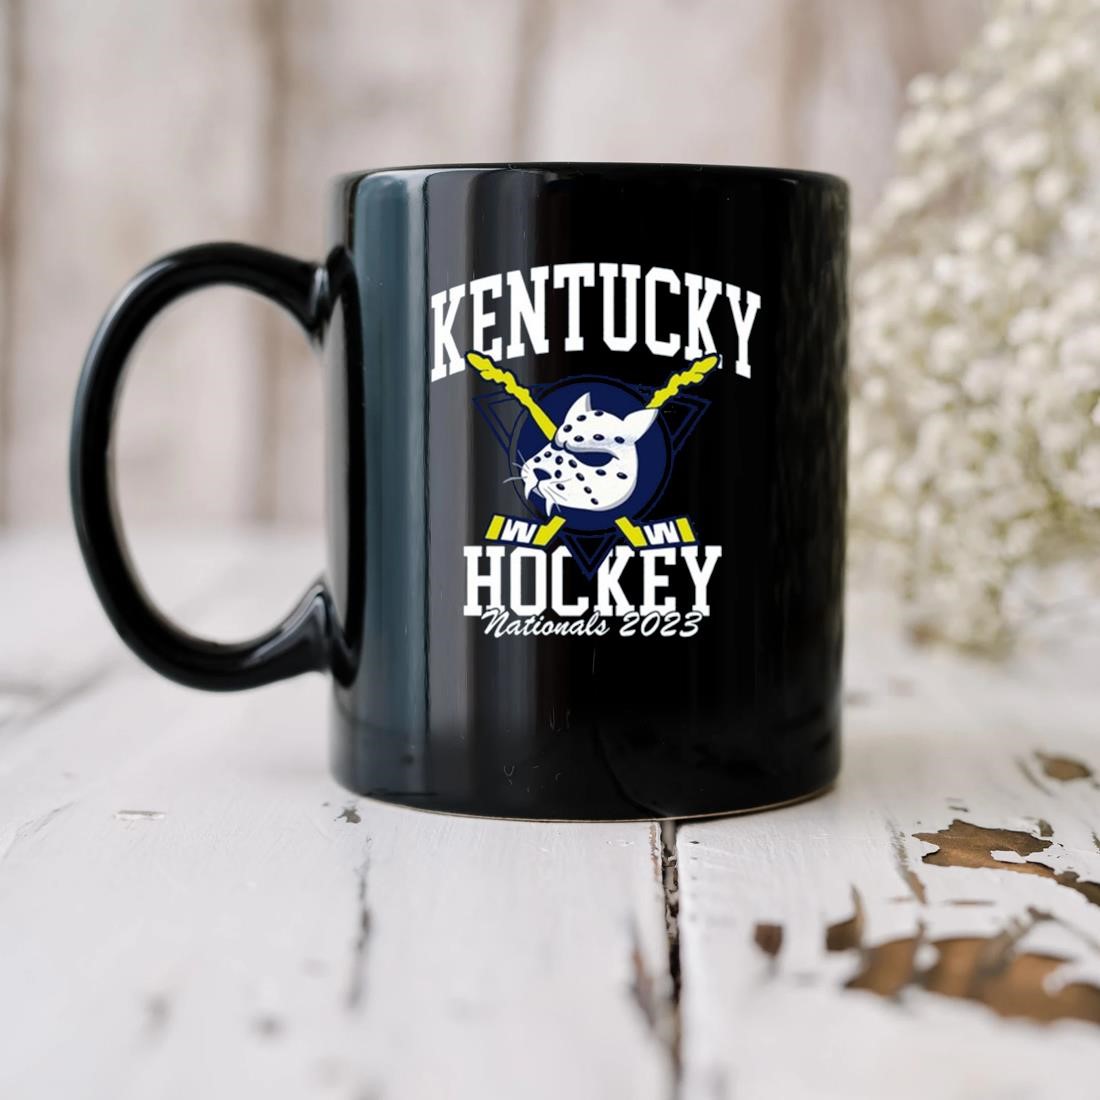 Kentucky Hockey Nationals 2023 Mug